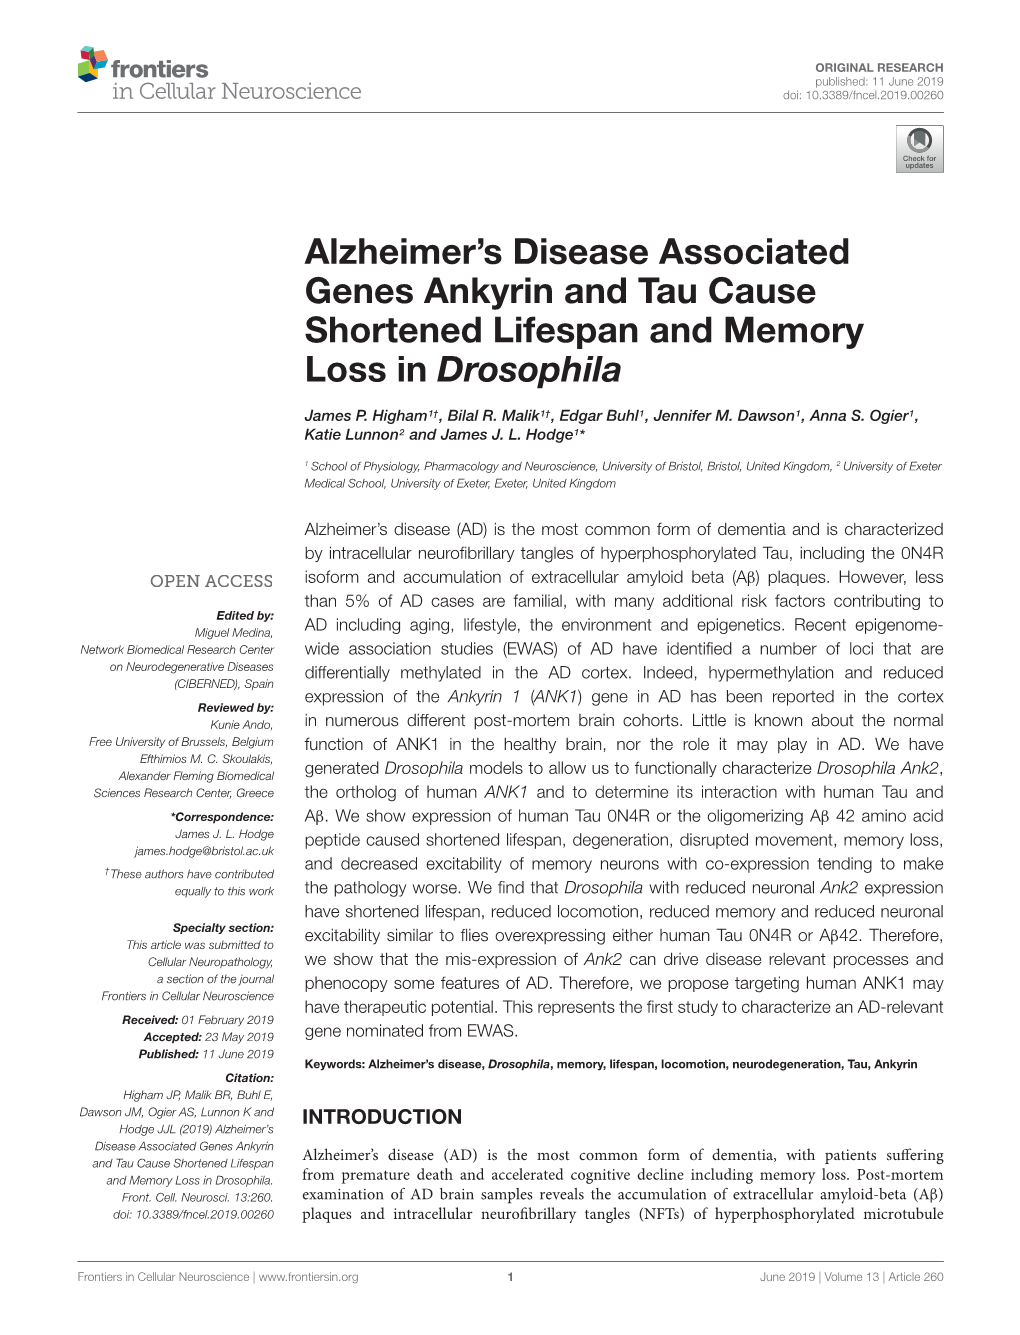 Alzheimer's Disease Associated Genes Ankyrin and Tau